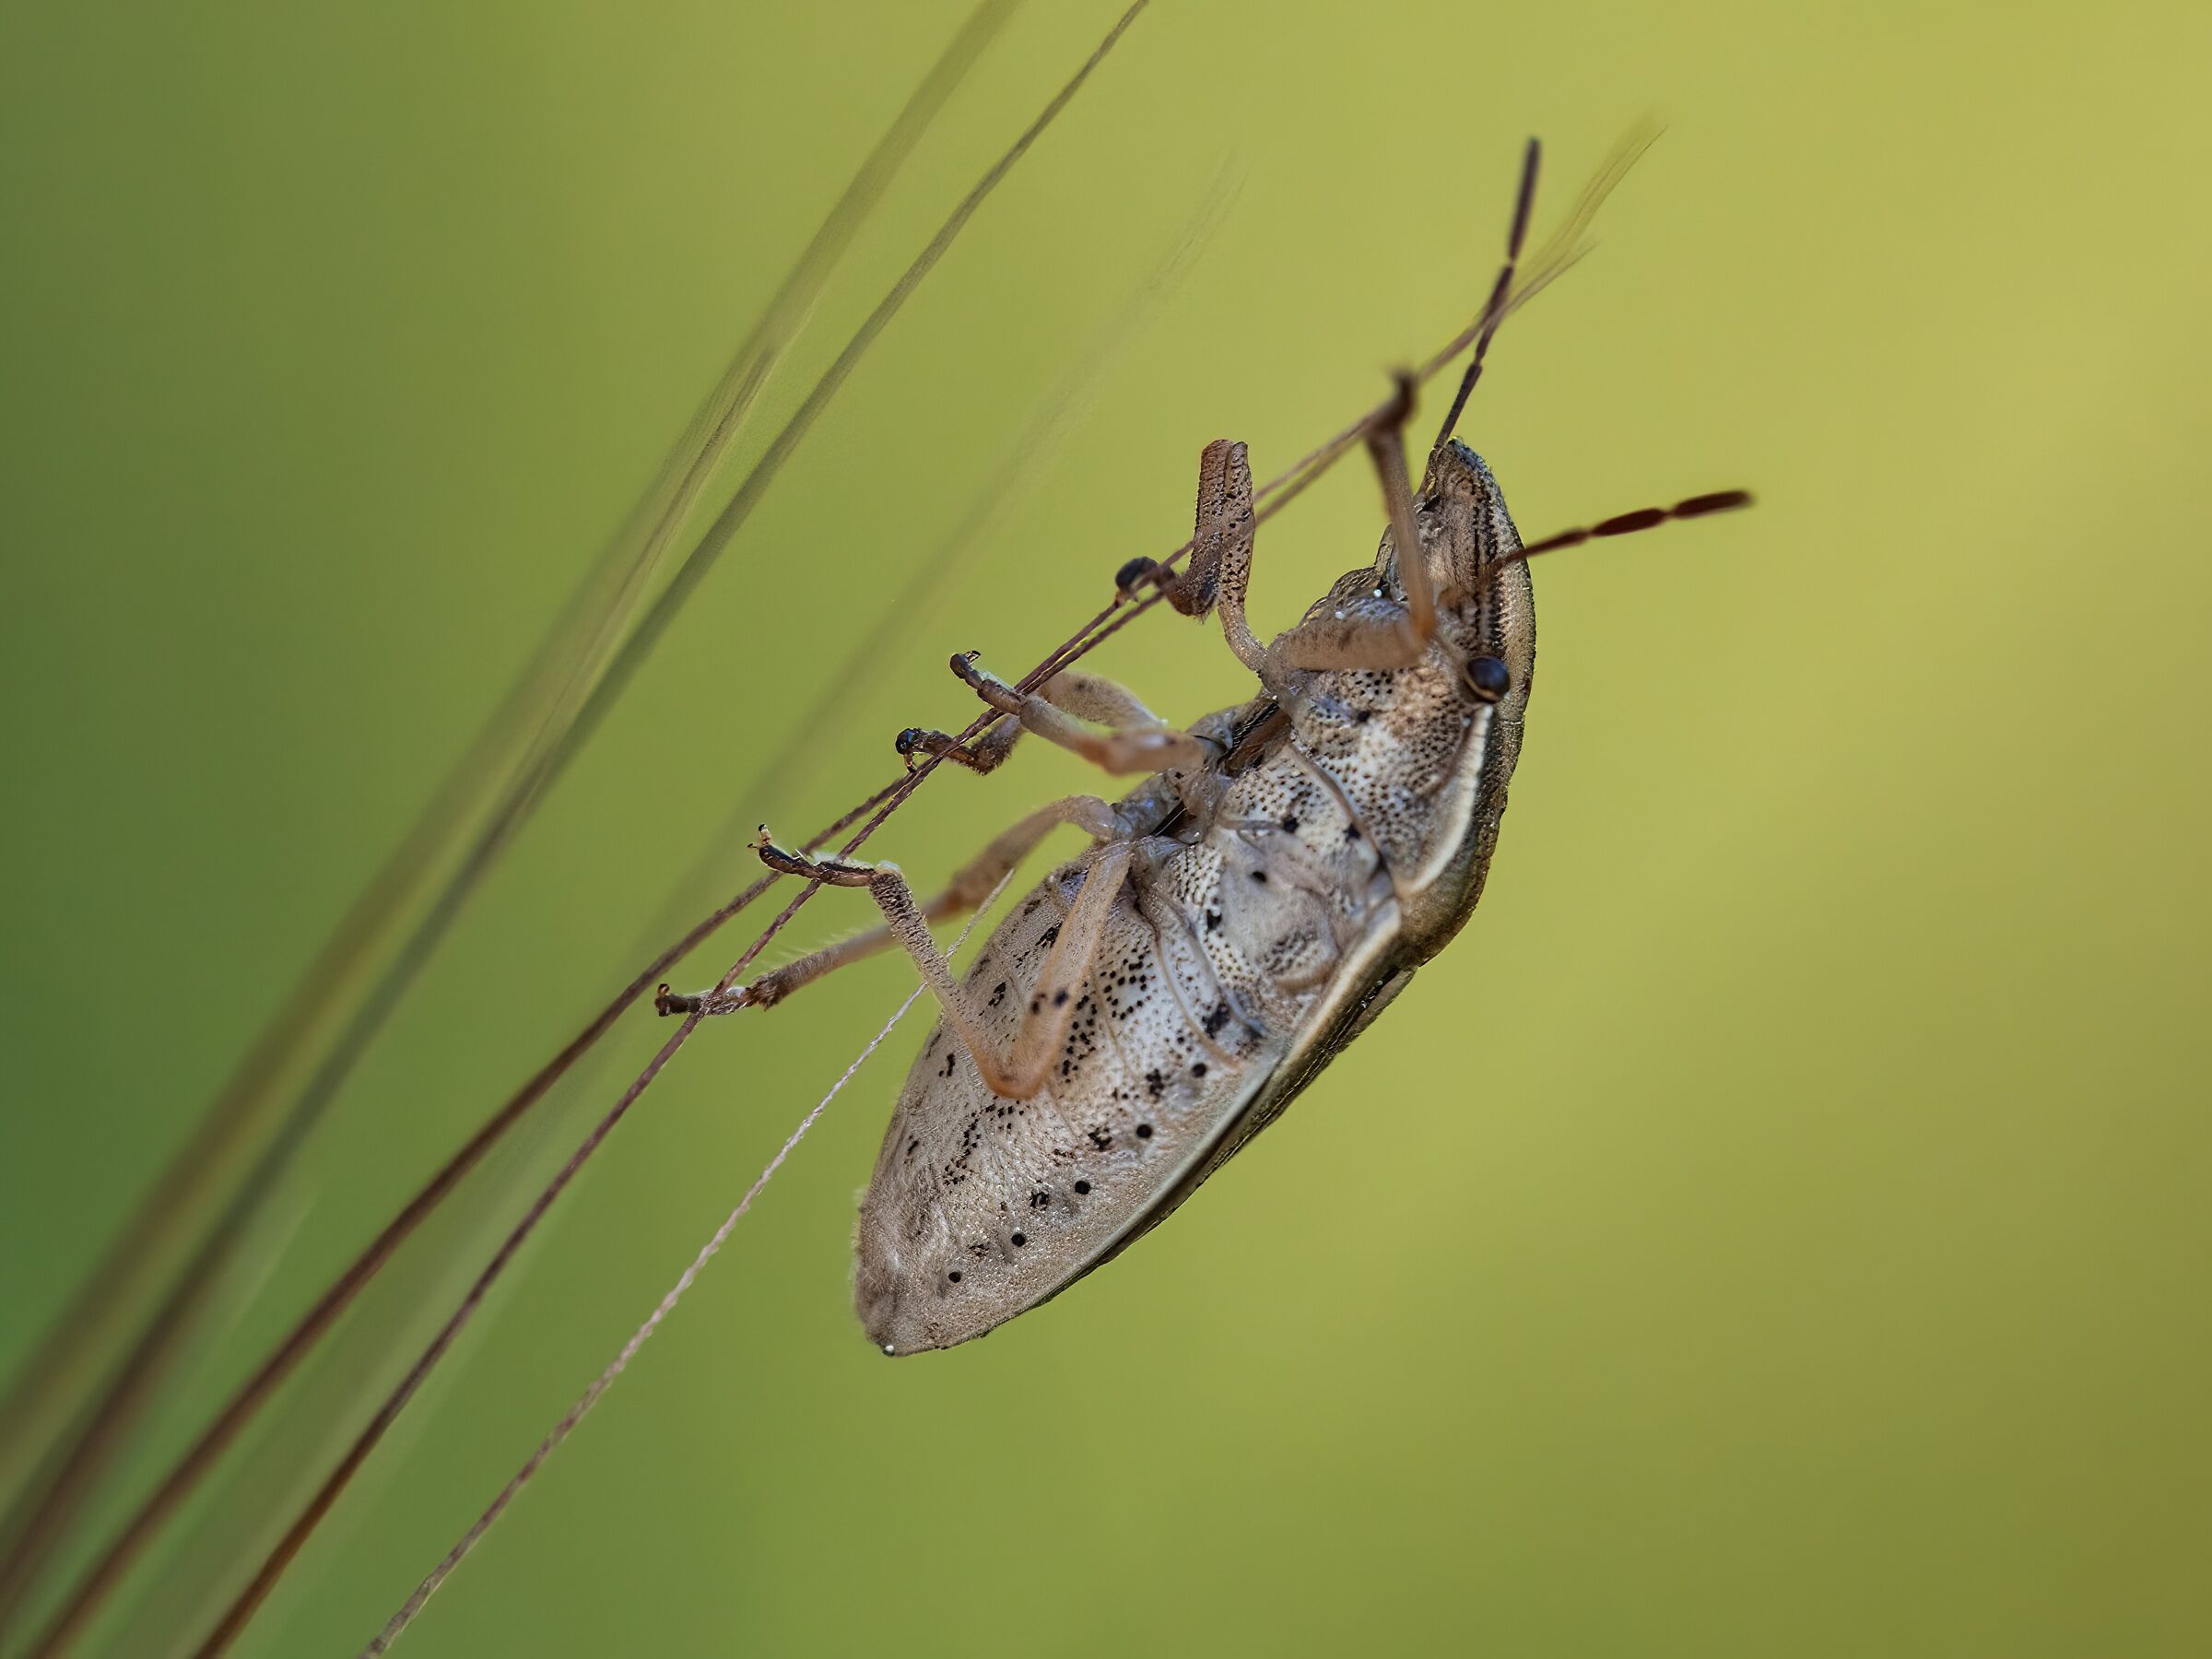 Marmorated stink bug (Haliomorpha halis)...